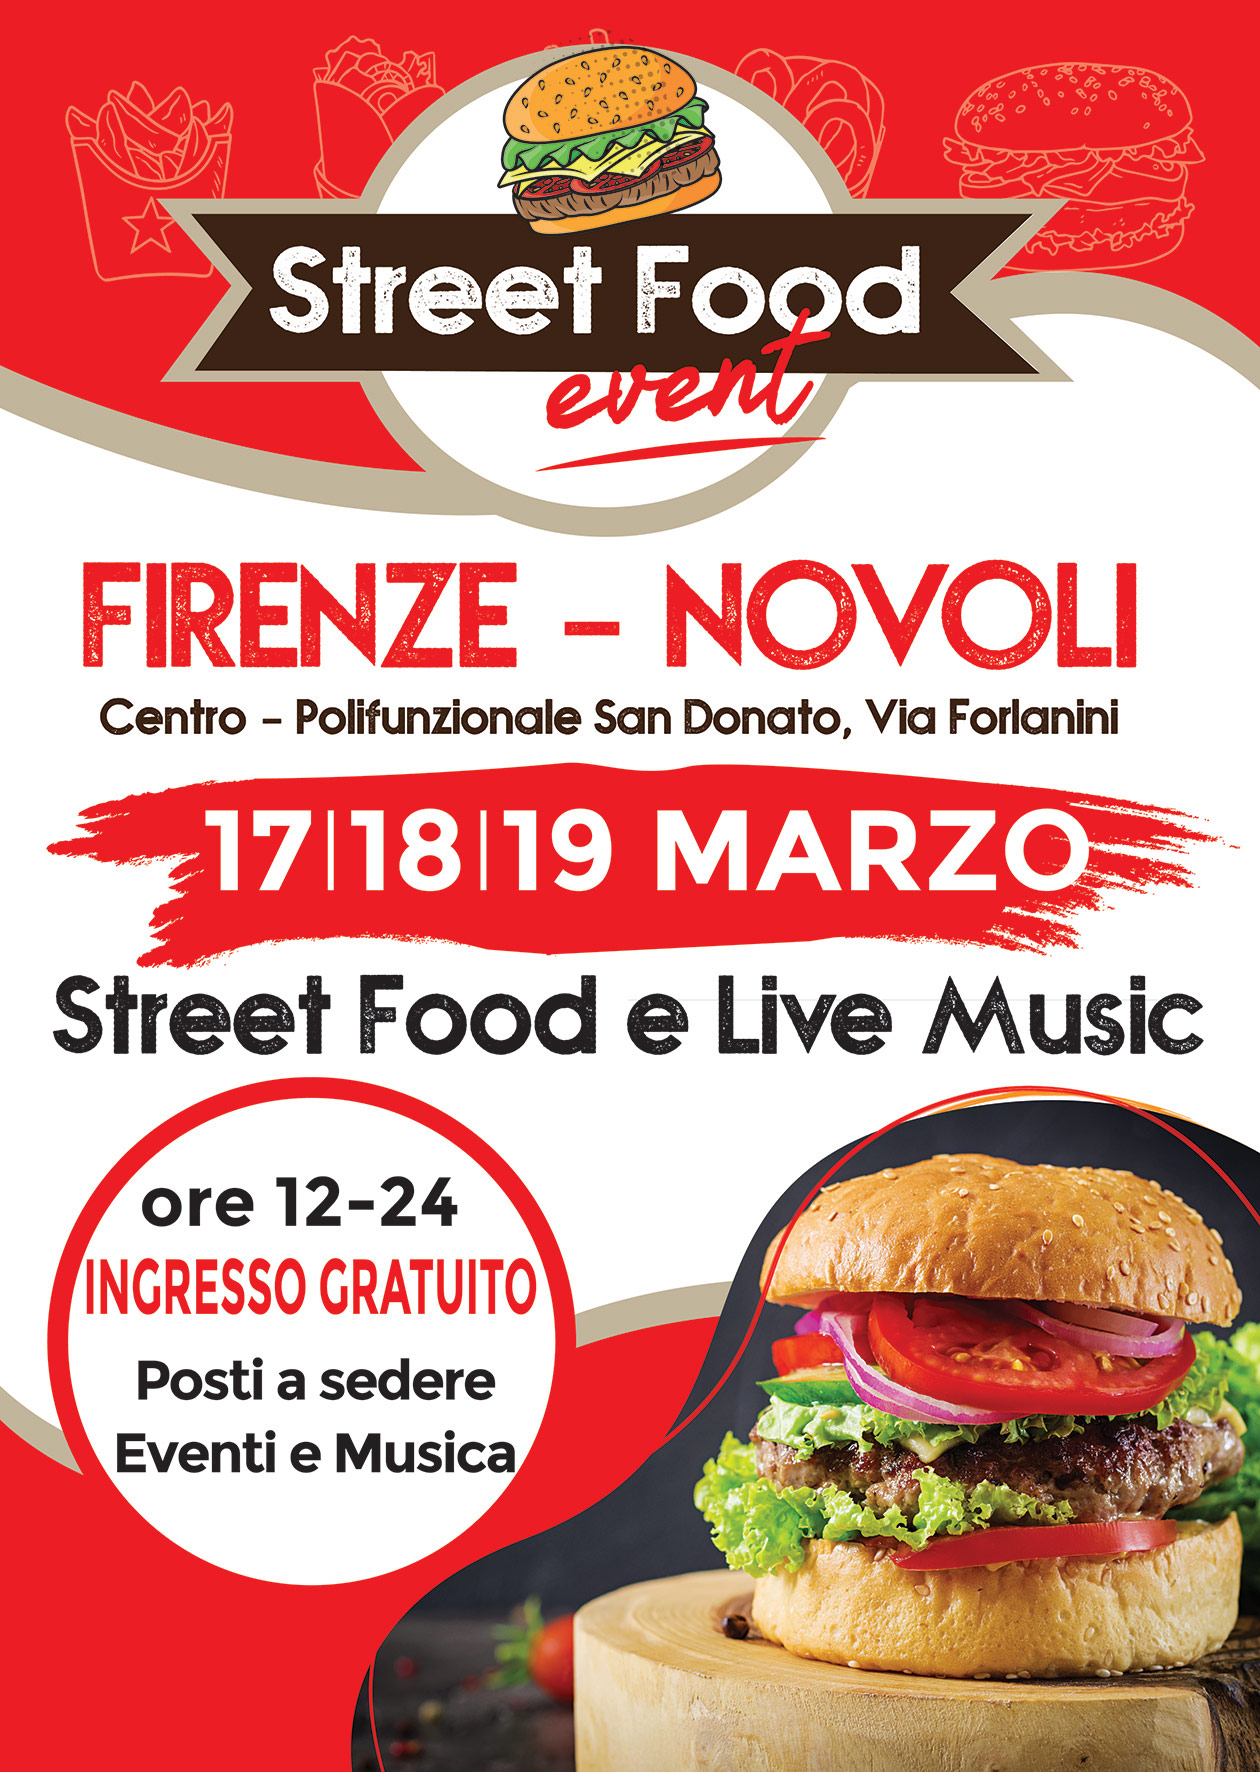 Street Food Firenze Novoli